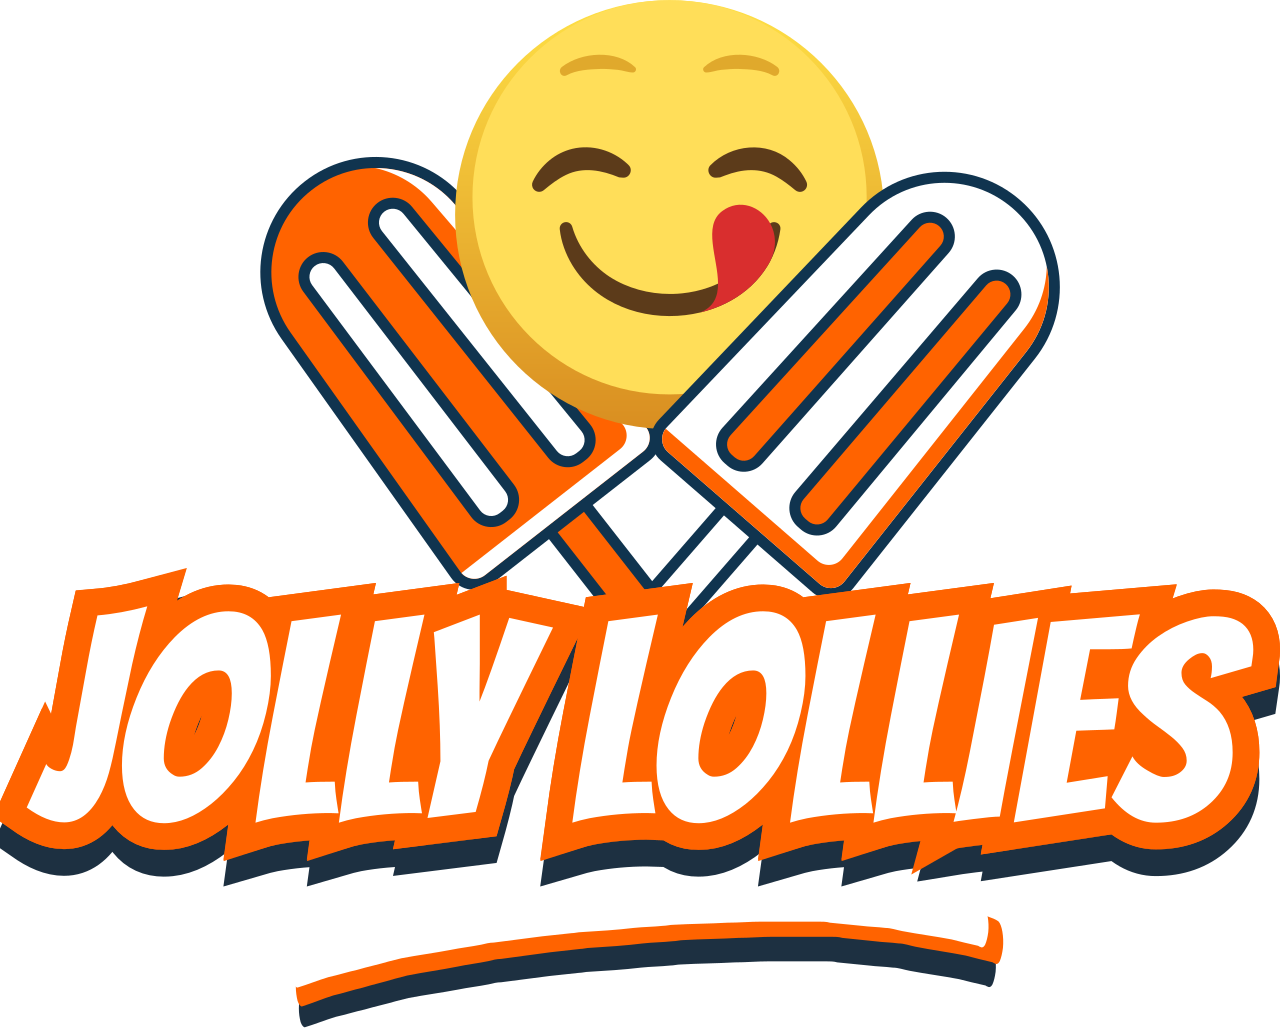 jolly lollies's logo